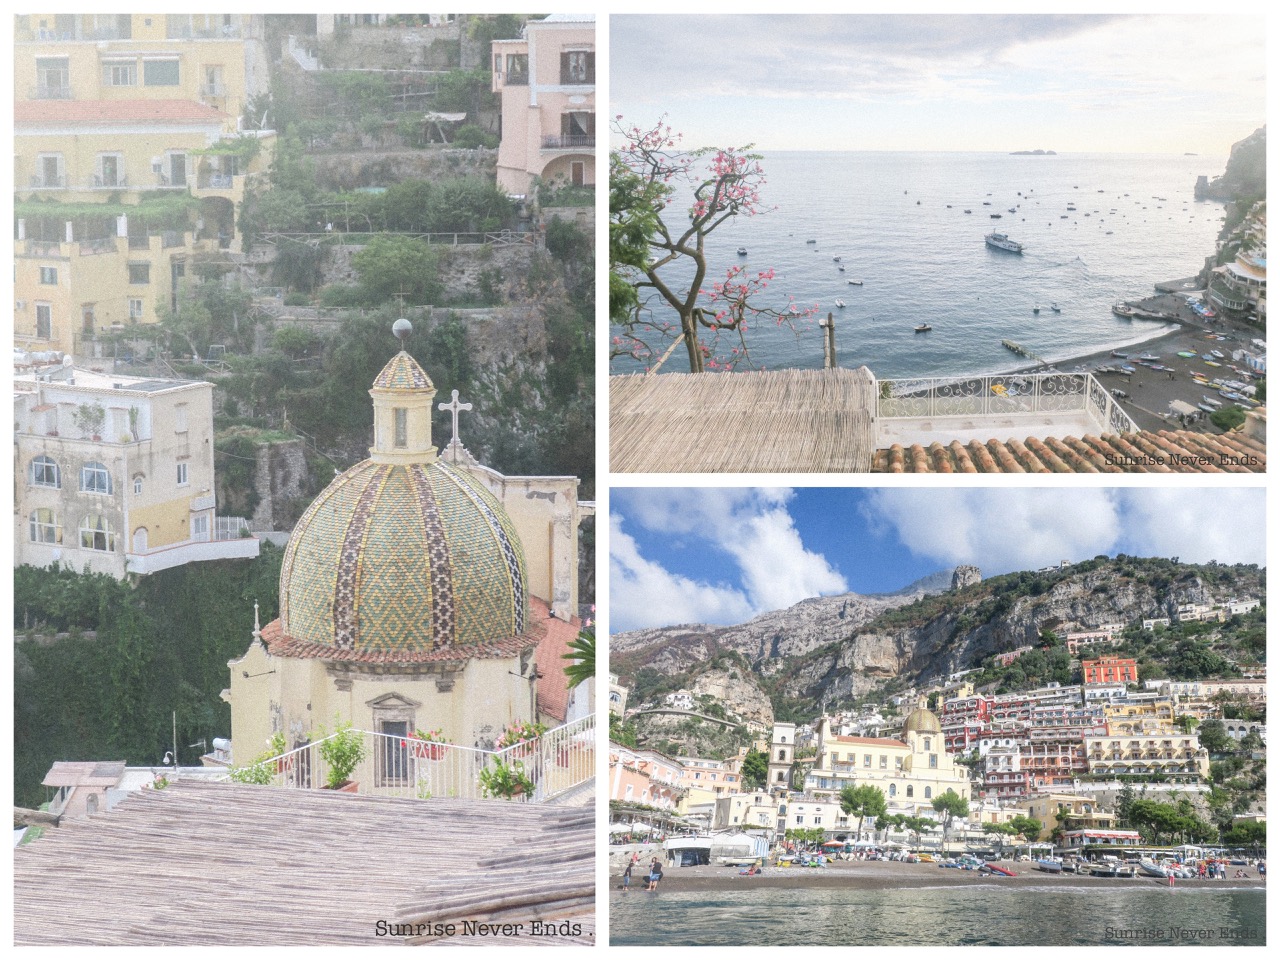 positano,italie,aliceetfantometteontheboat,anitalianboattrip,travel,travel blogger,travel guide,cote amalfitaine